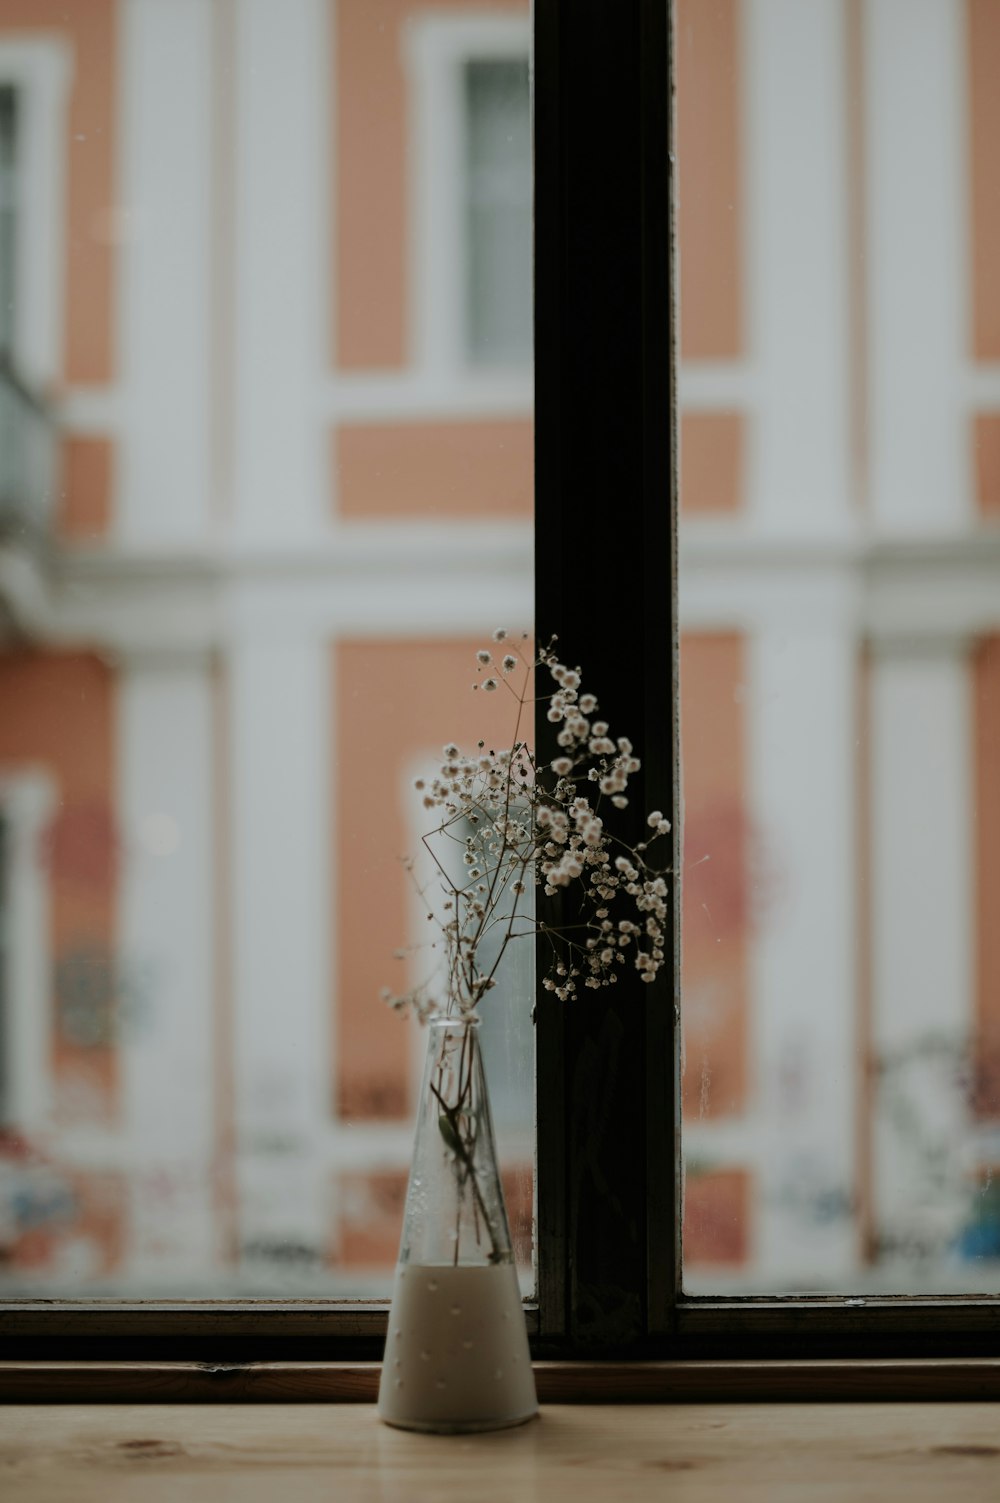 white Baby's Breath flowers in vase near window